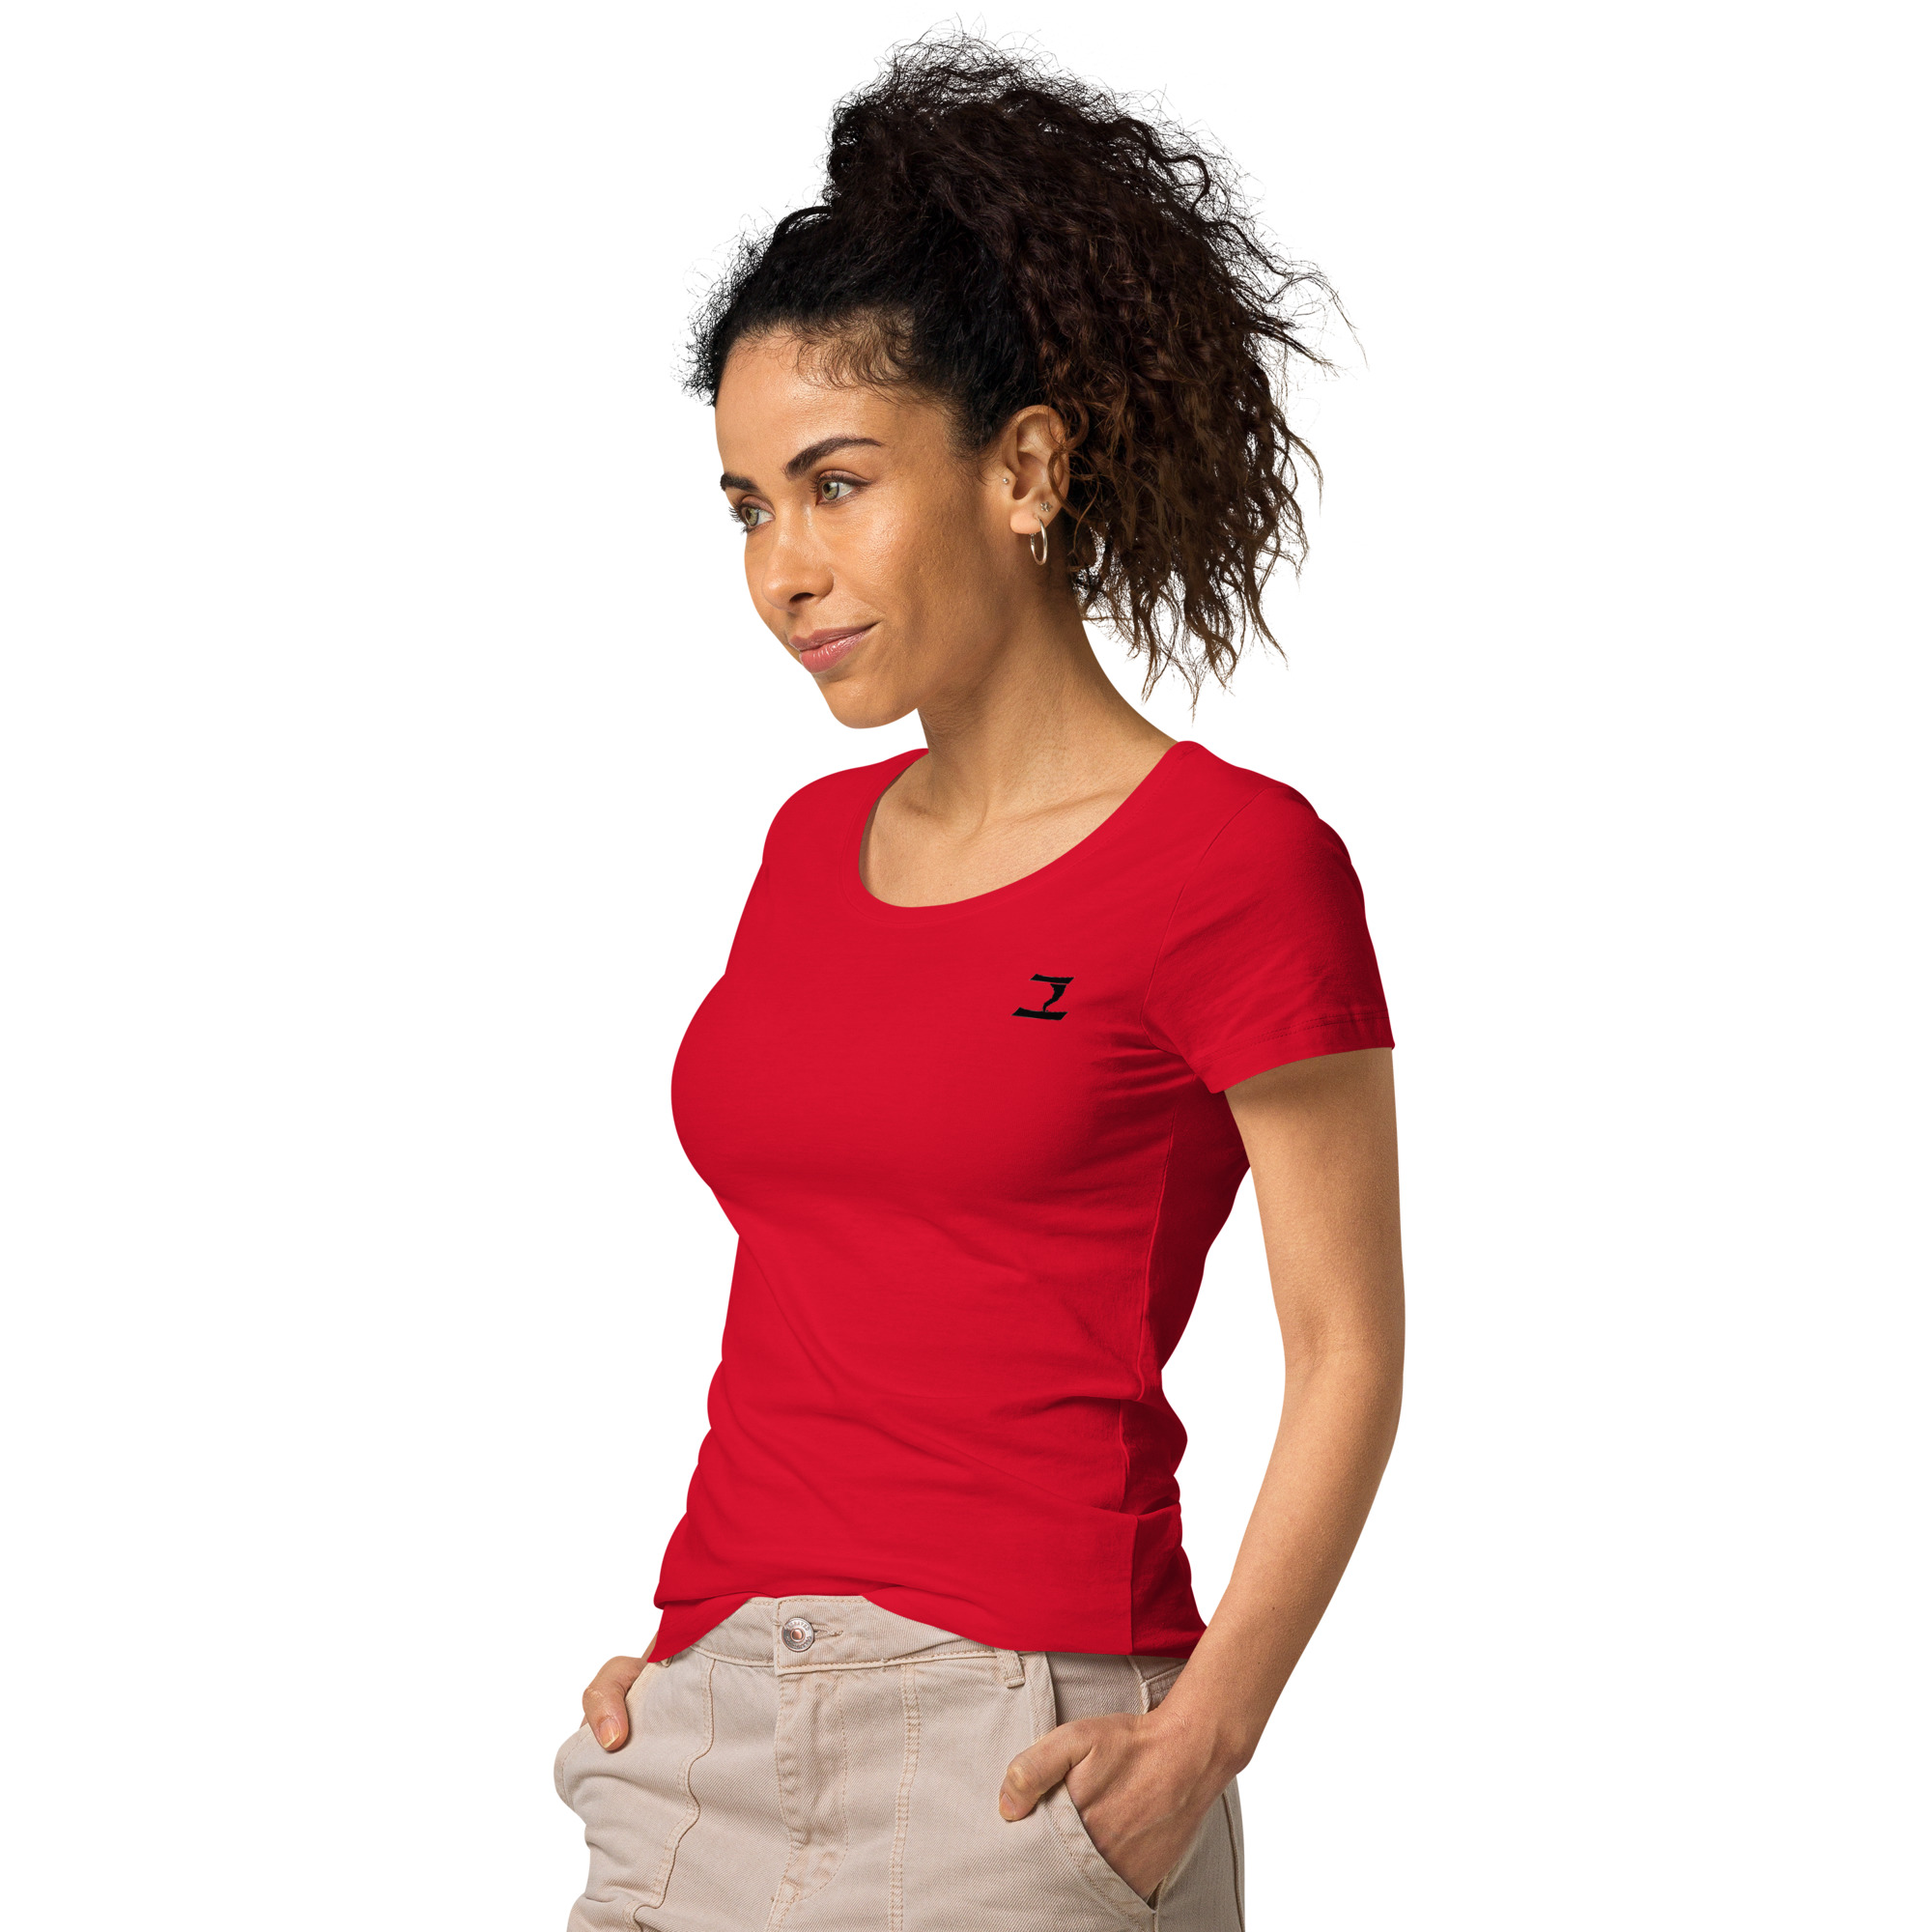 womens-basic-organic-t-shirt-red-left-front-63169537560a6.jpg